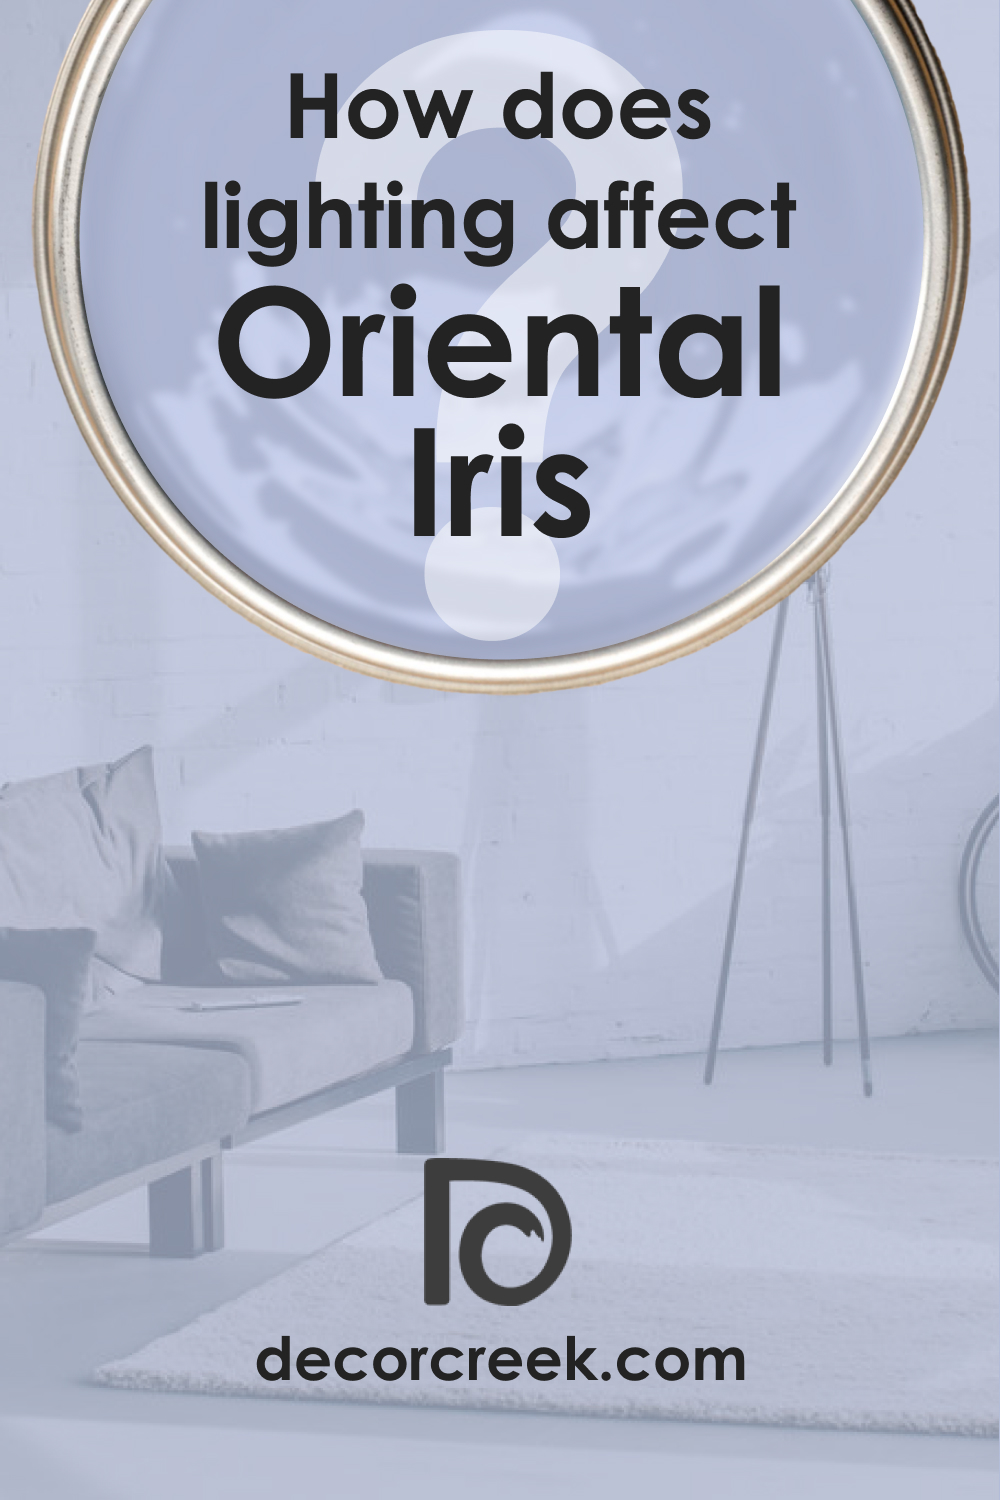 How Does Lighting Affect Oriental Iris 1418?